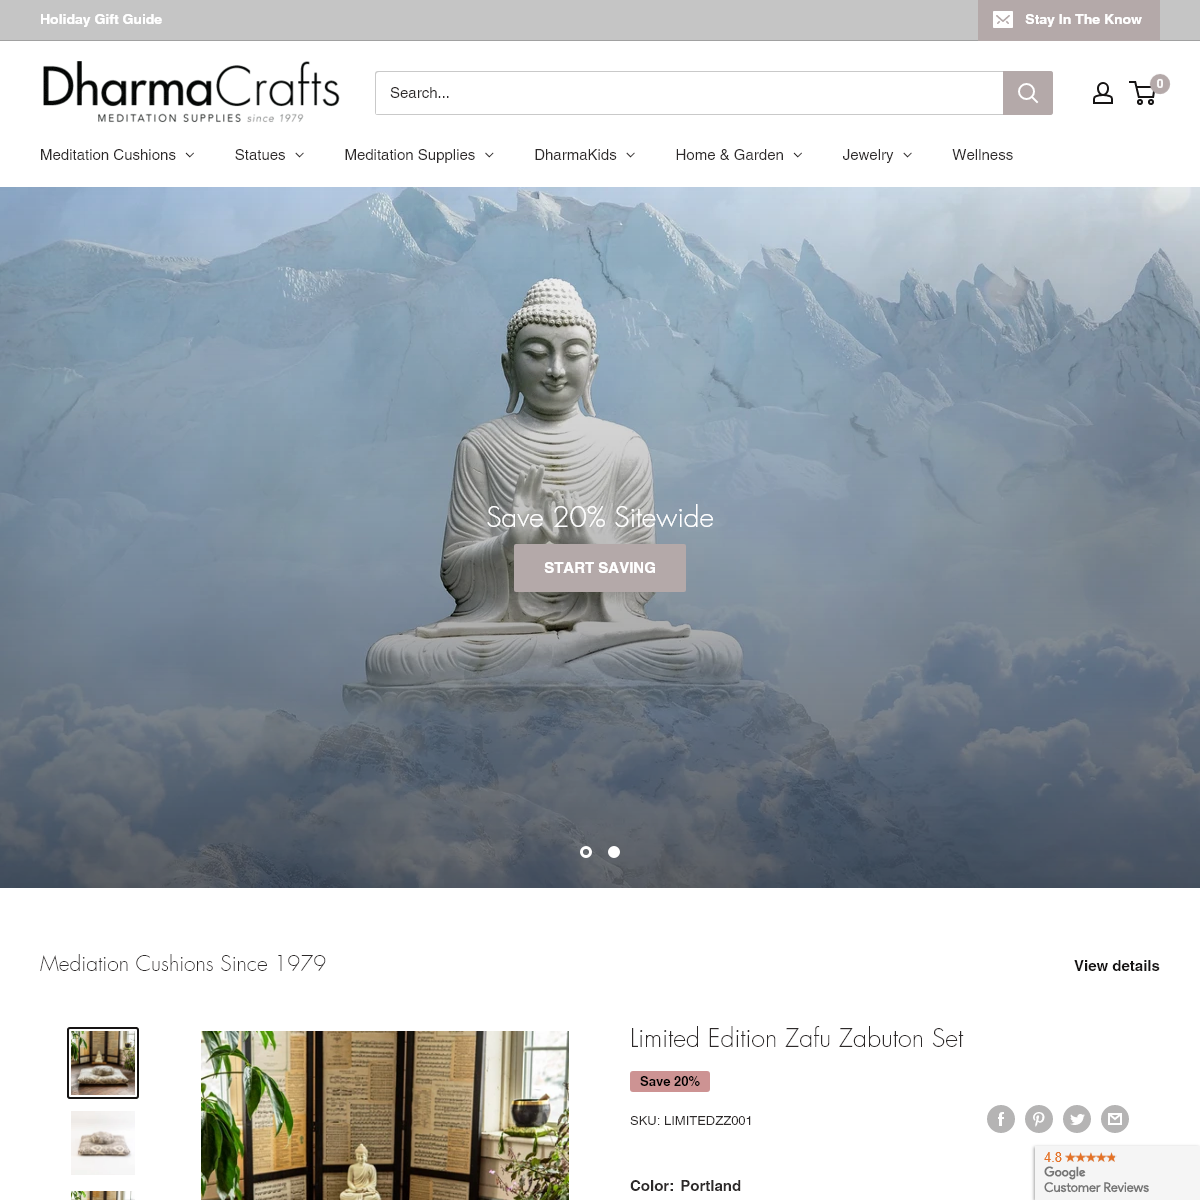 DharmaCrafts -Meditation cushions, statues, furnishings, incense